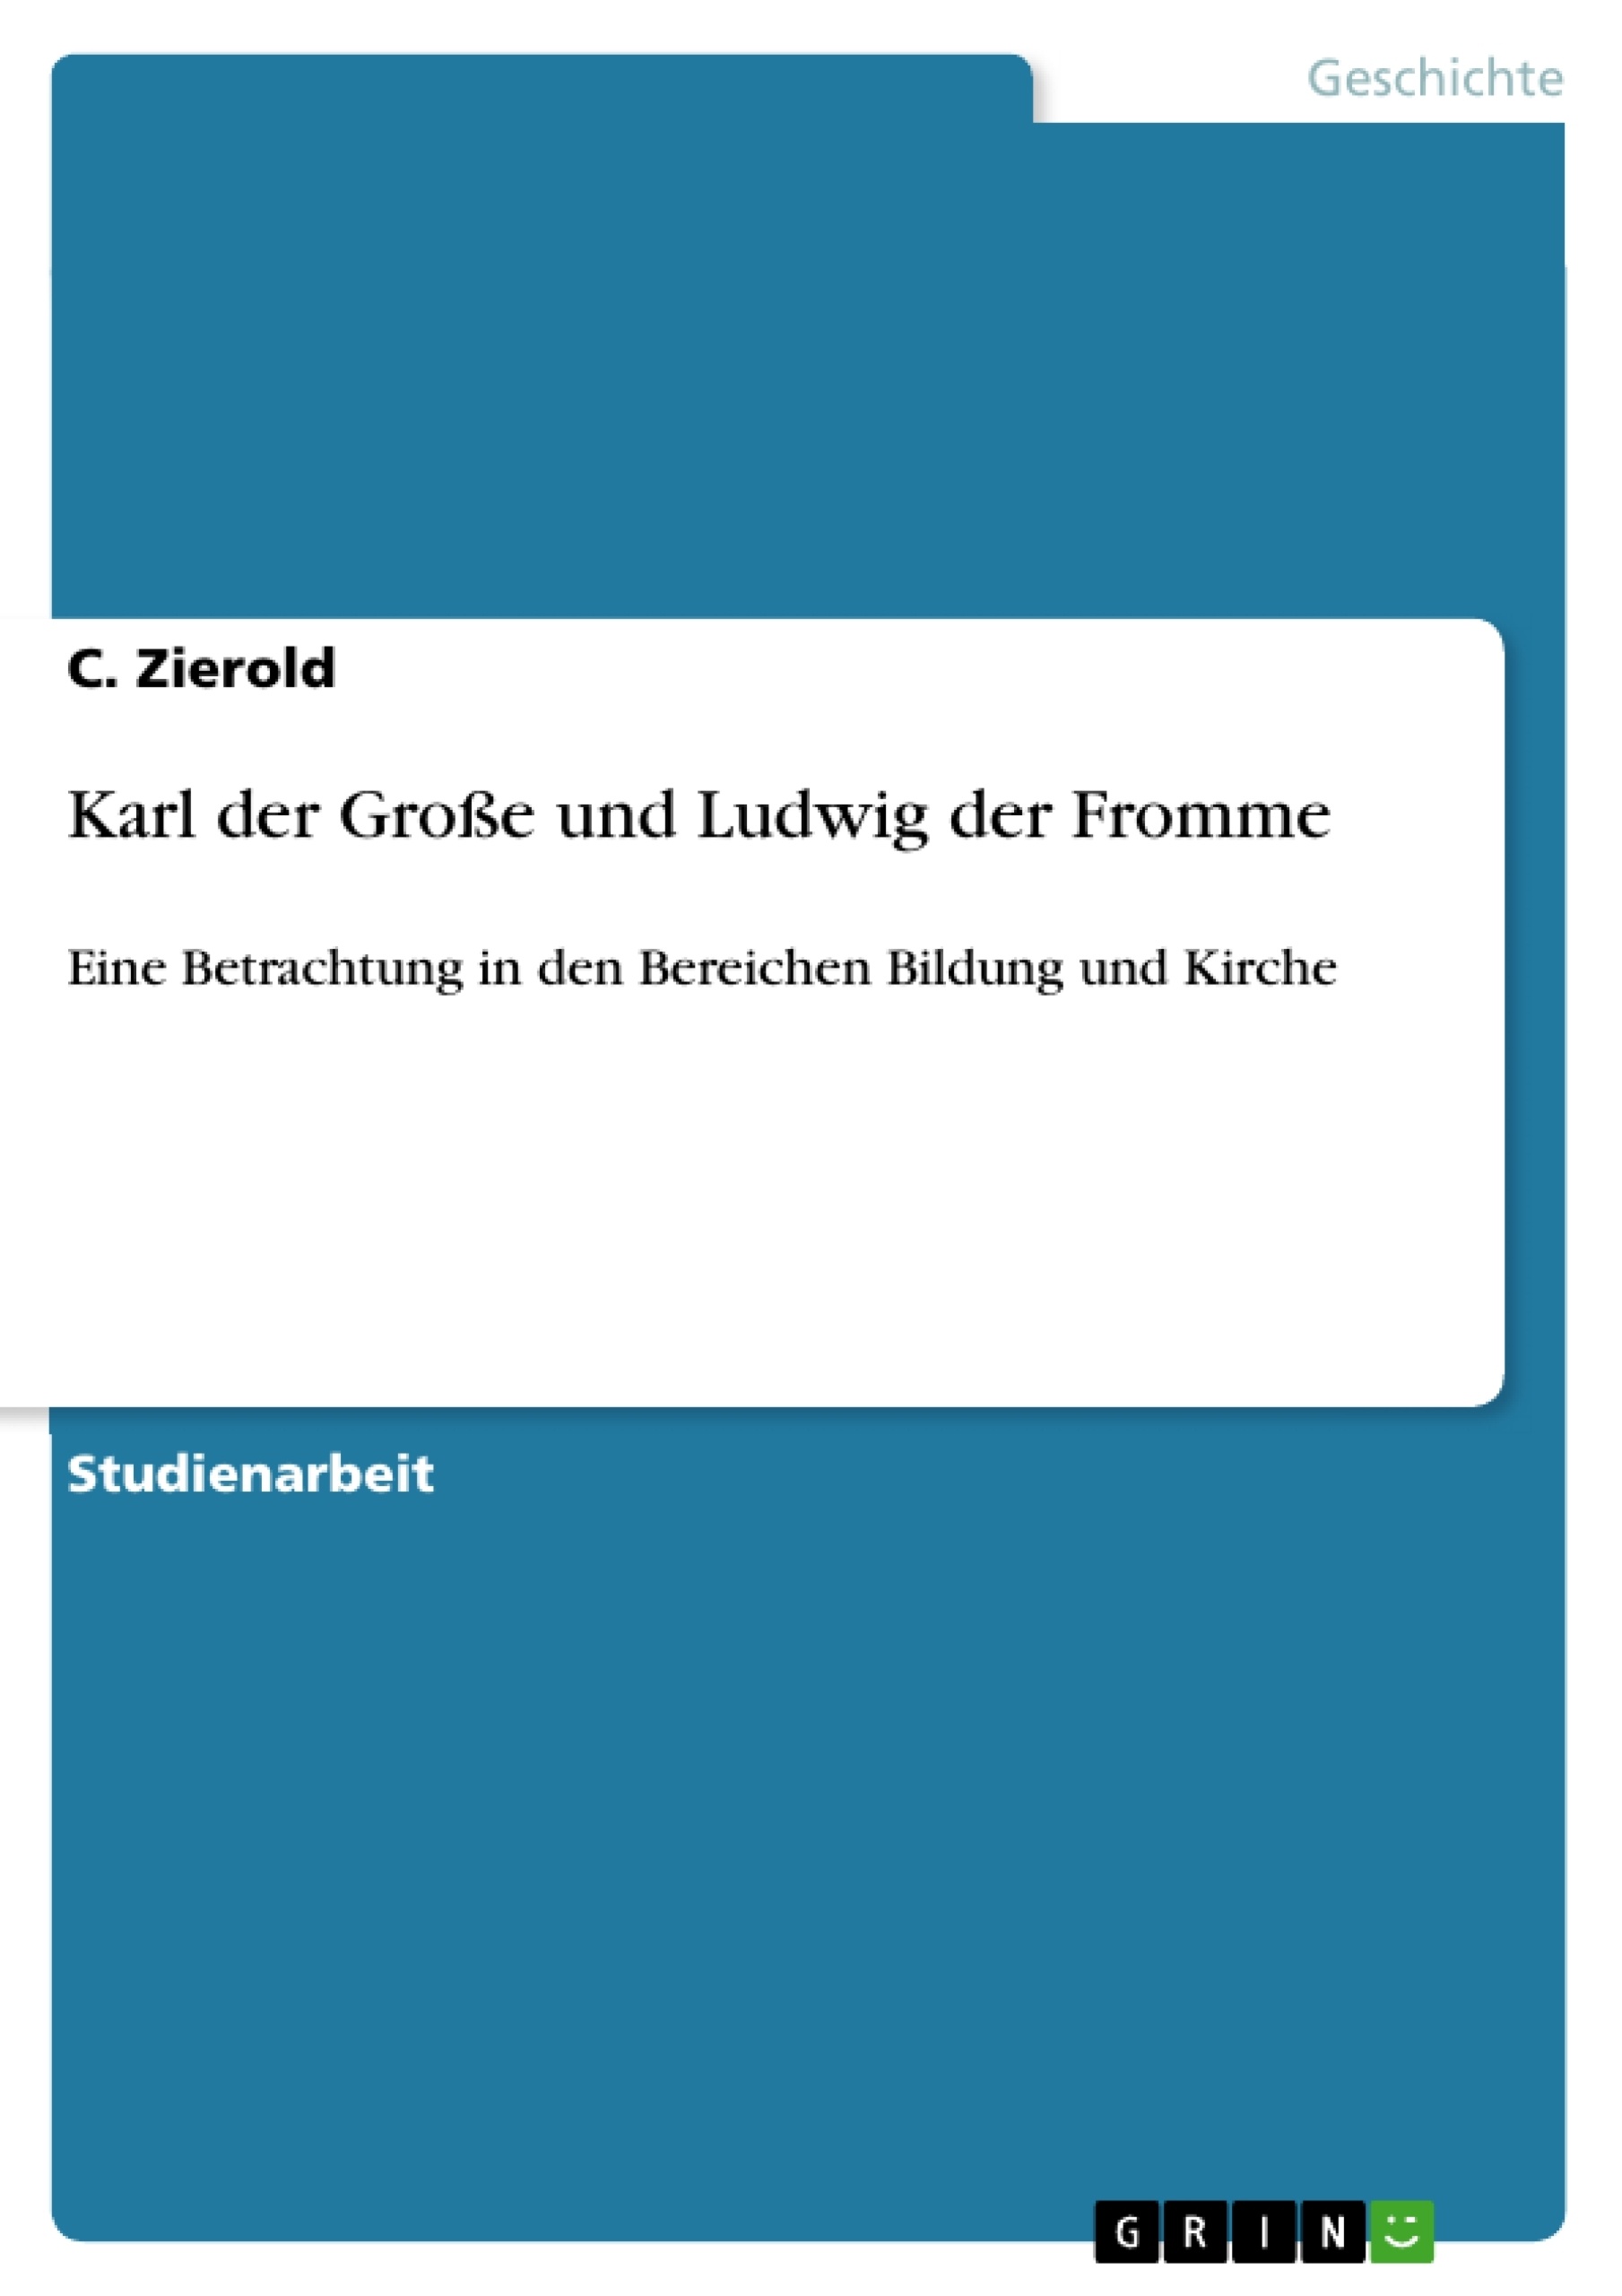 Título: Karl der Große und Ludwig der Fromme 